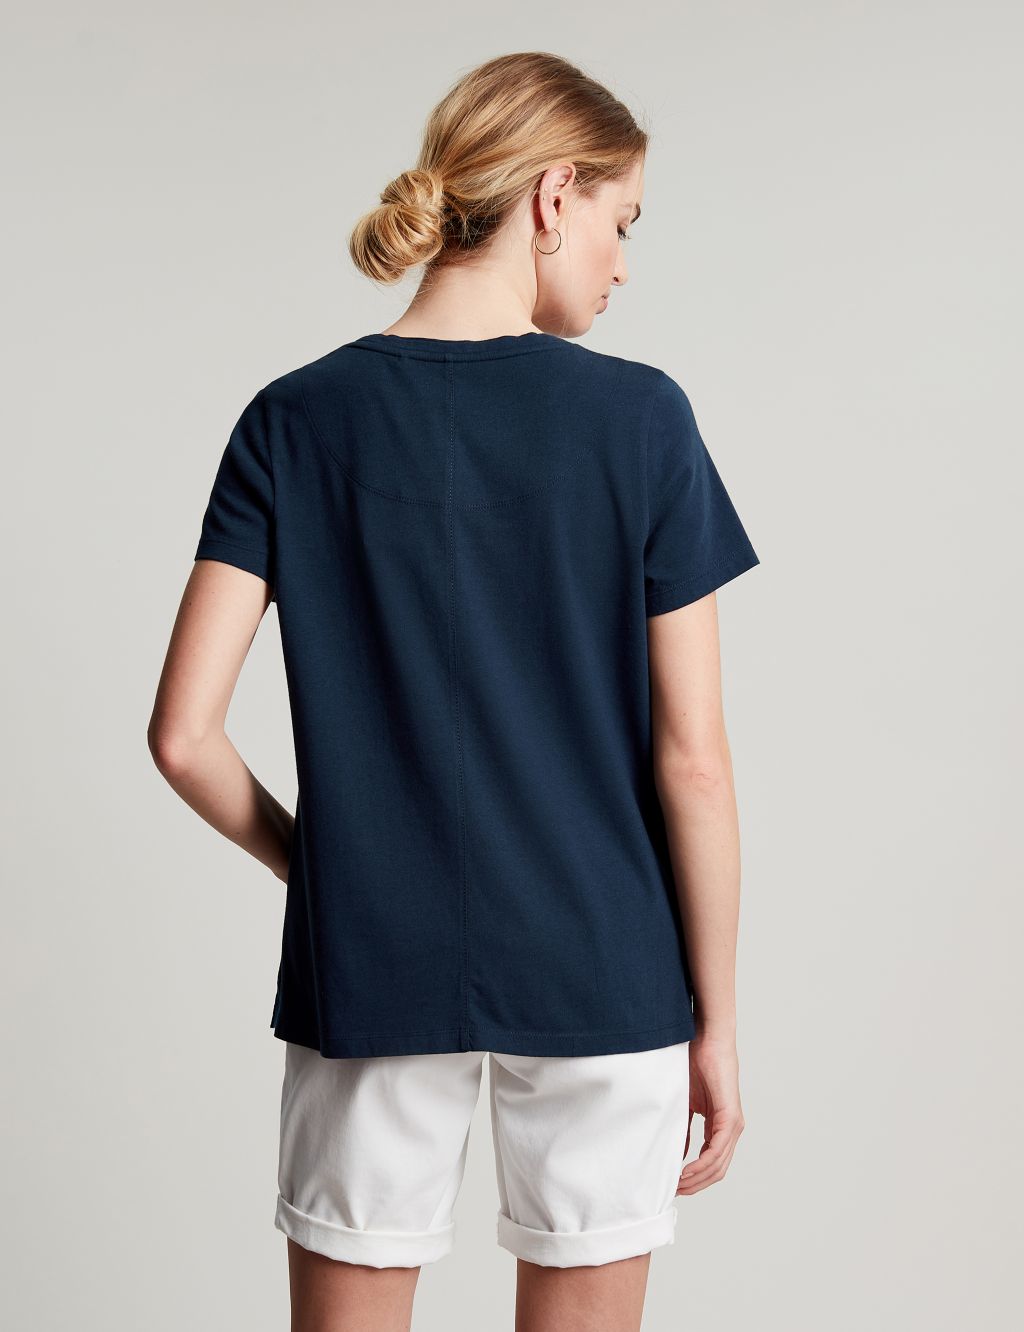 Cotton Modal Blend T-Shirt image 3